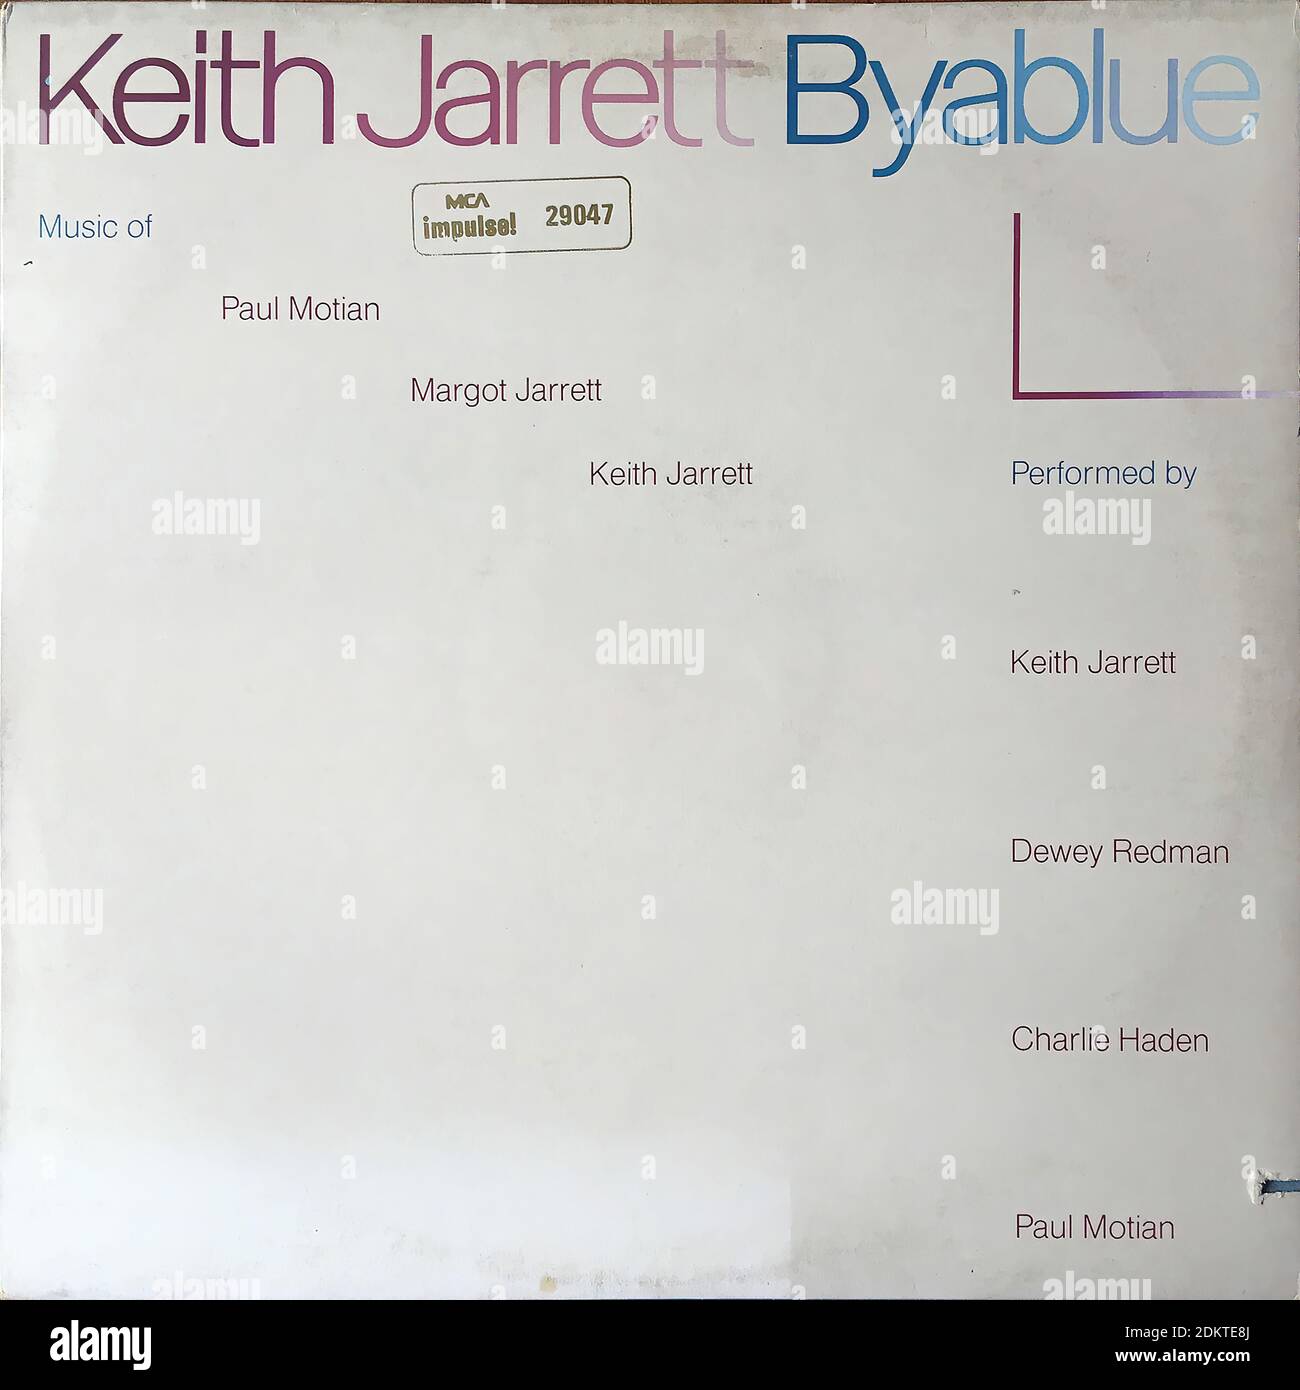 Keith Jarrett - Byablue - avec Dewey Redman, Charlie Haden, Paul Motian, MCA  Impulse! 29047, 1976 1977 - Vintage vinyle album couverture Photo Stock -  Alamy